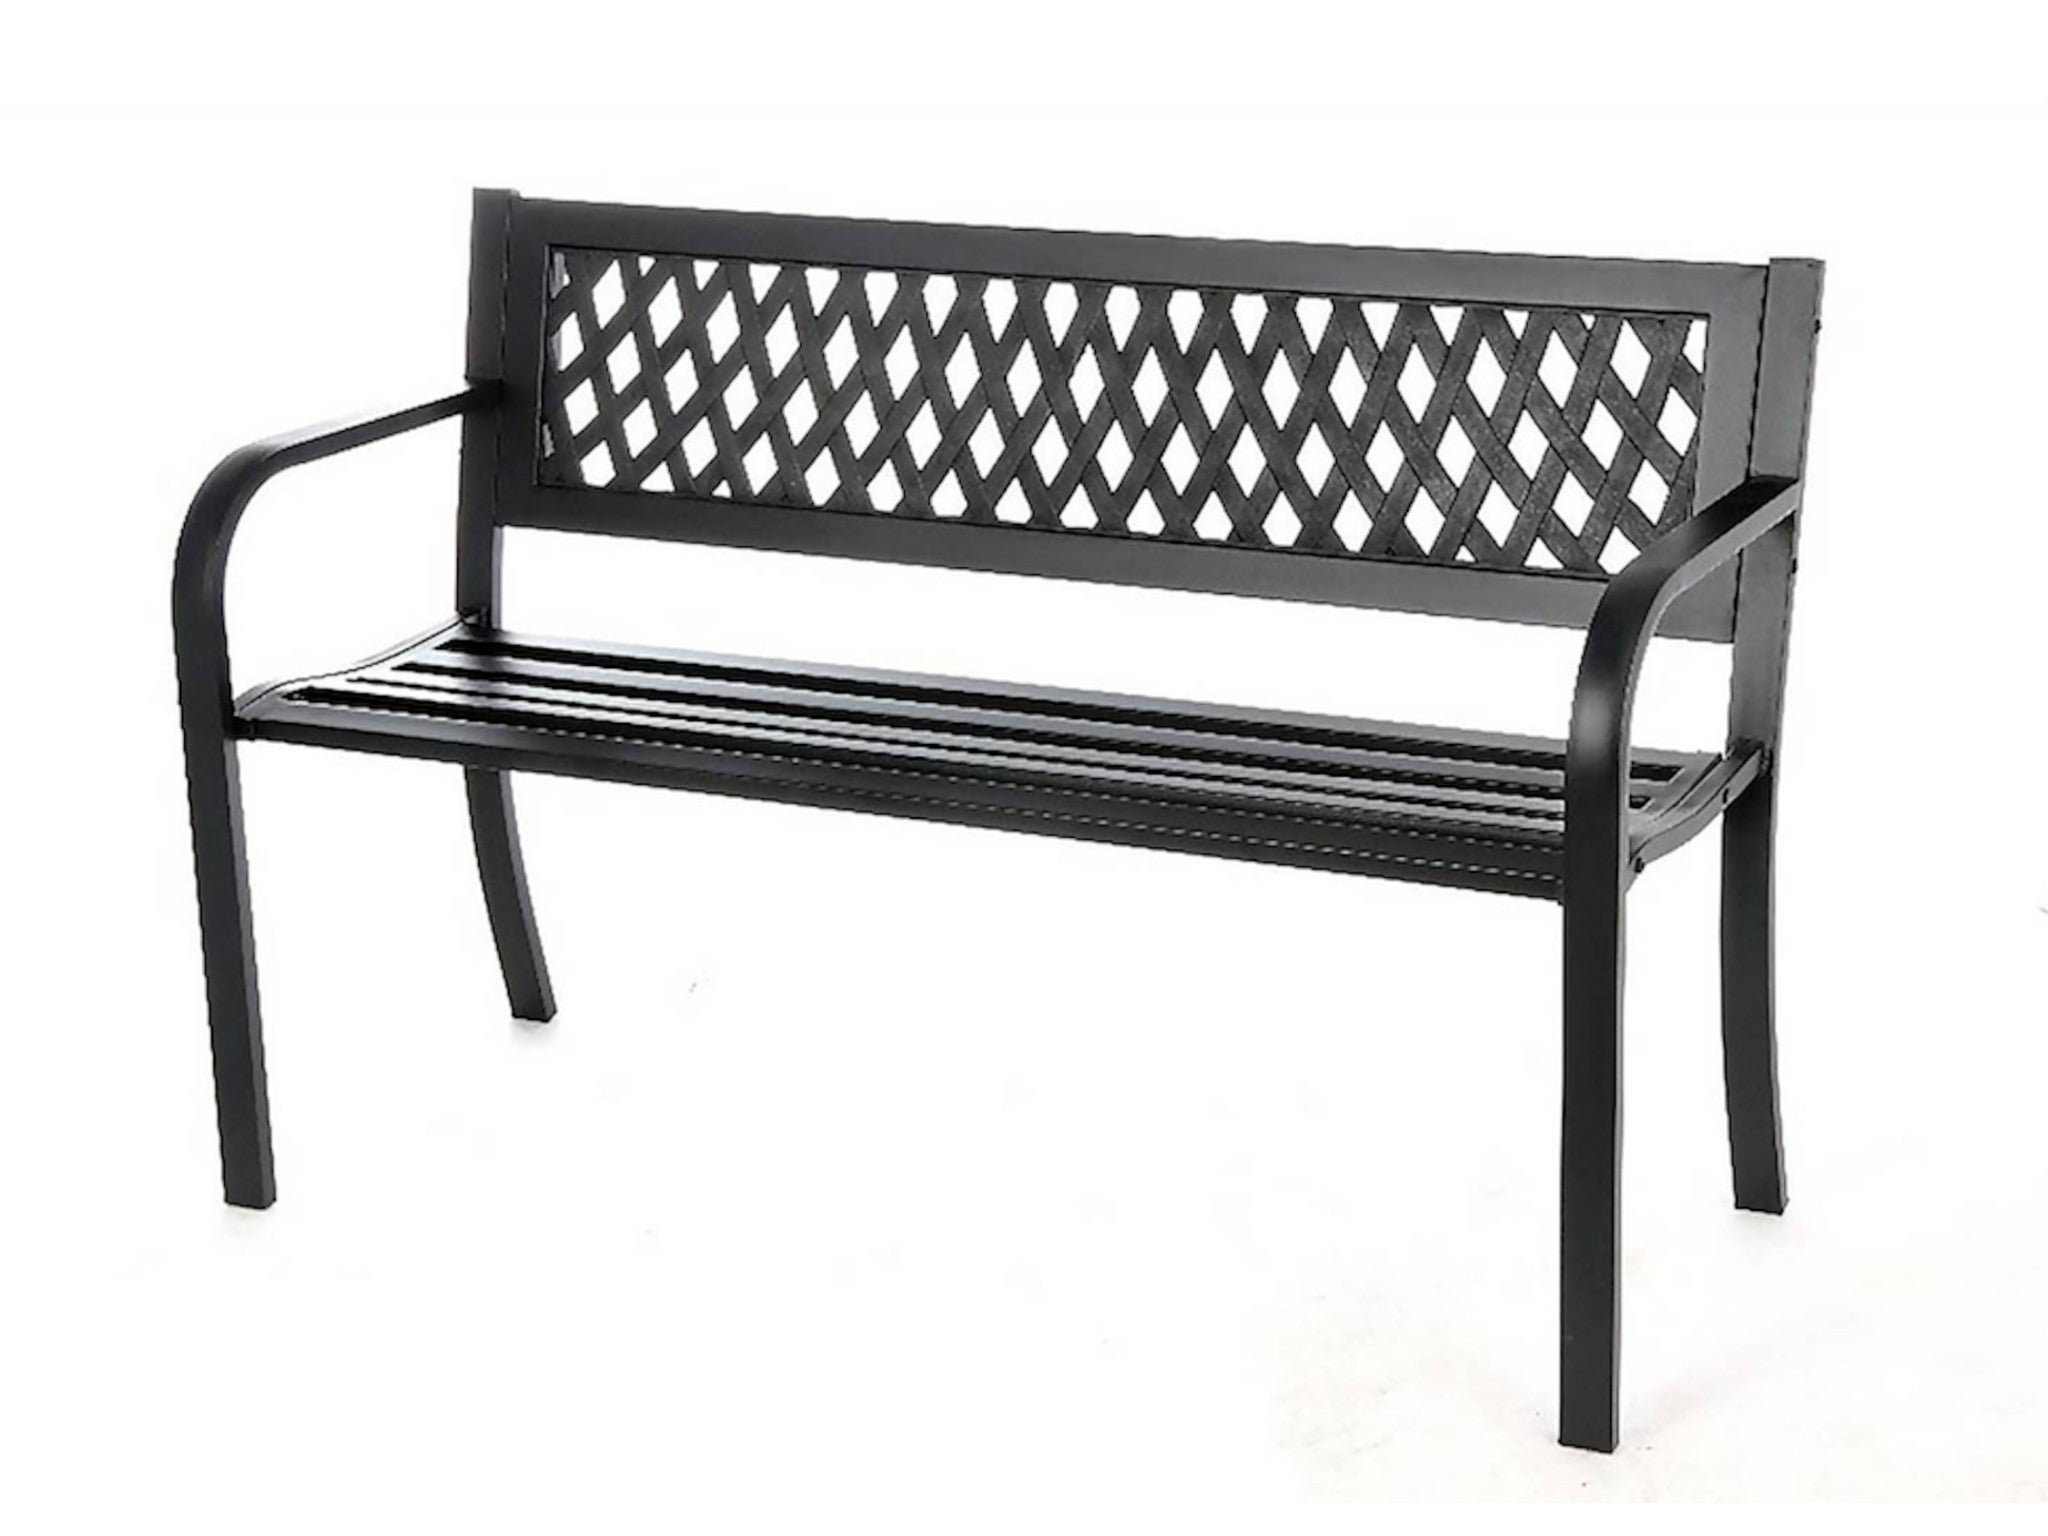 Homebase steel bench in black indybest.jpeg